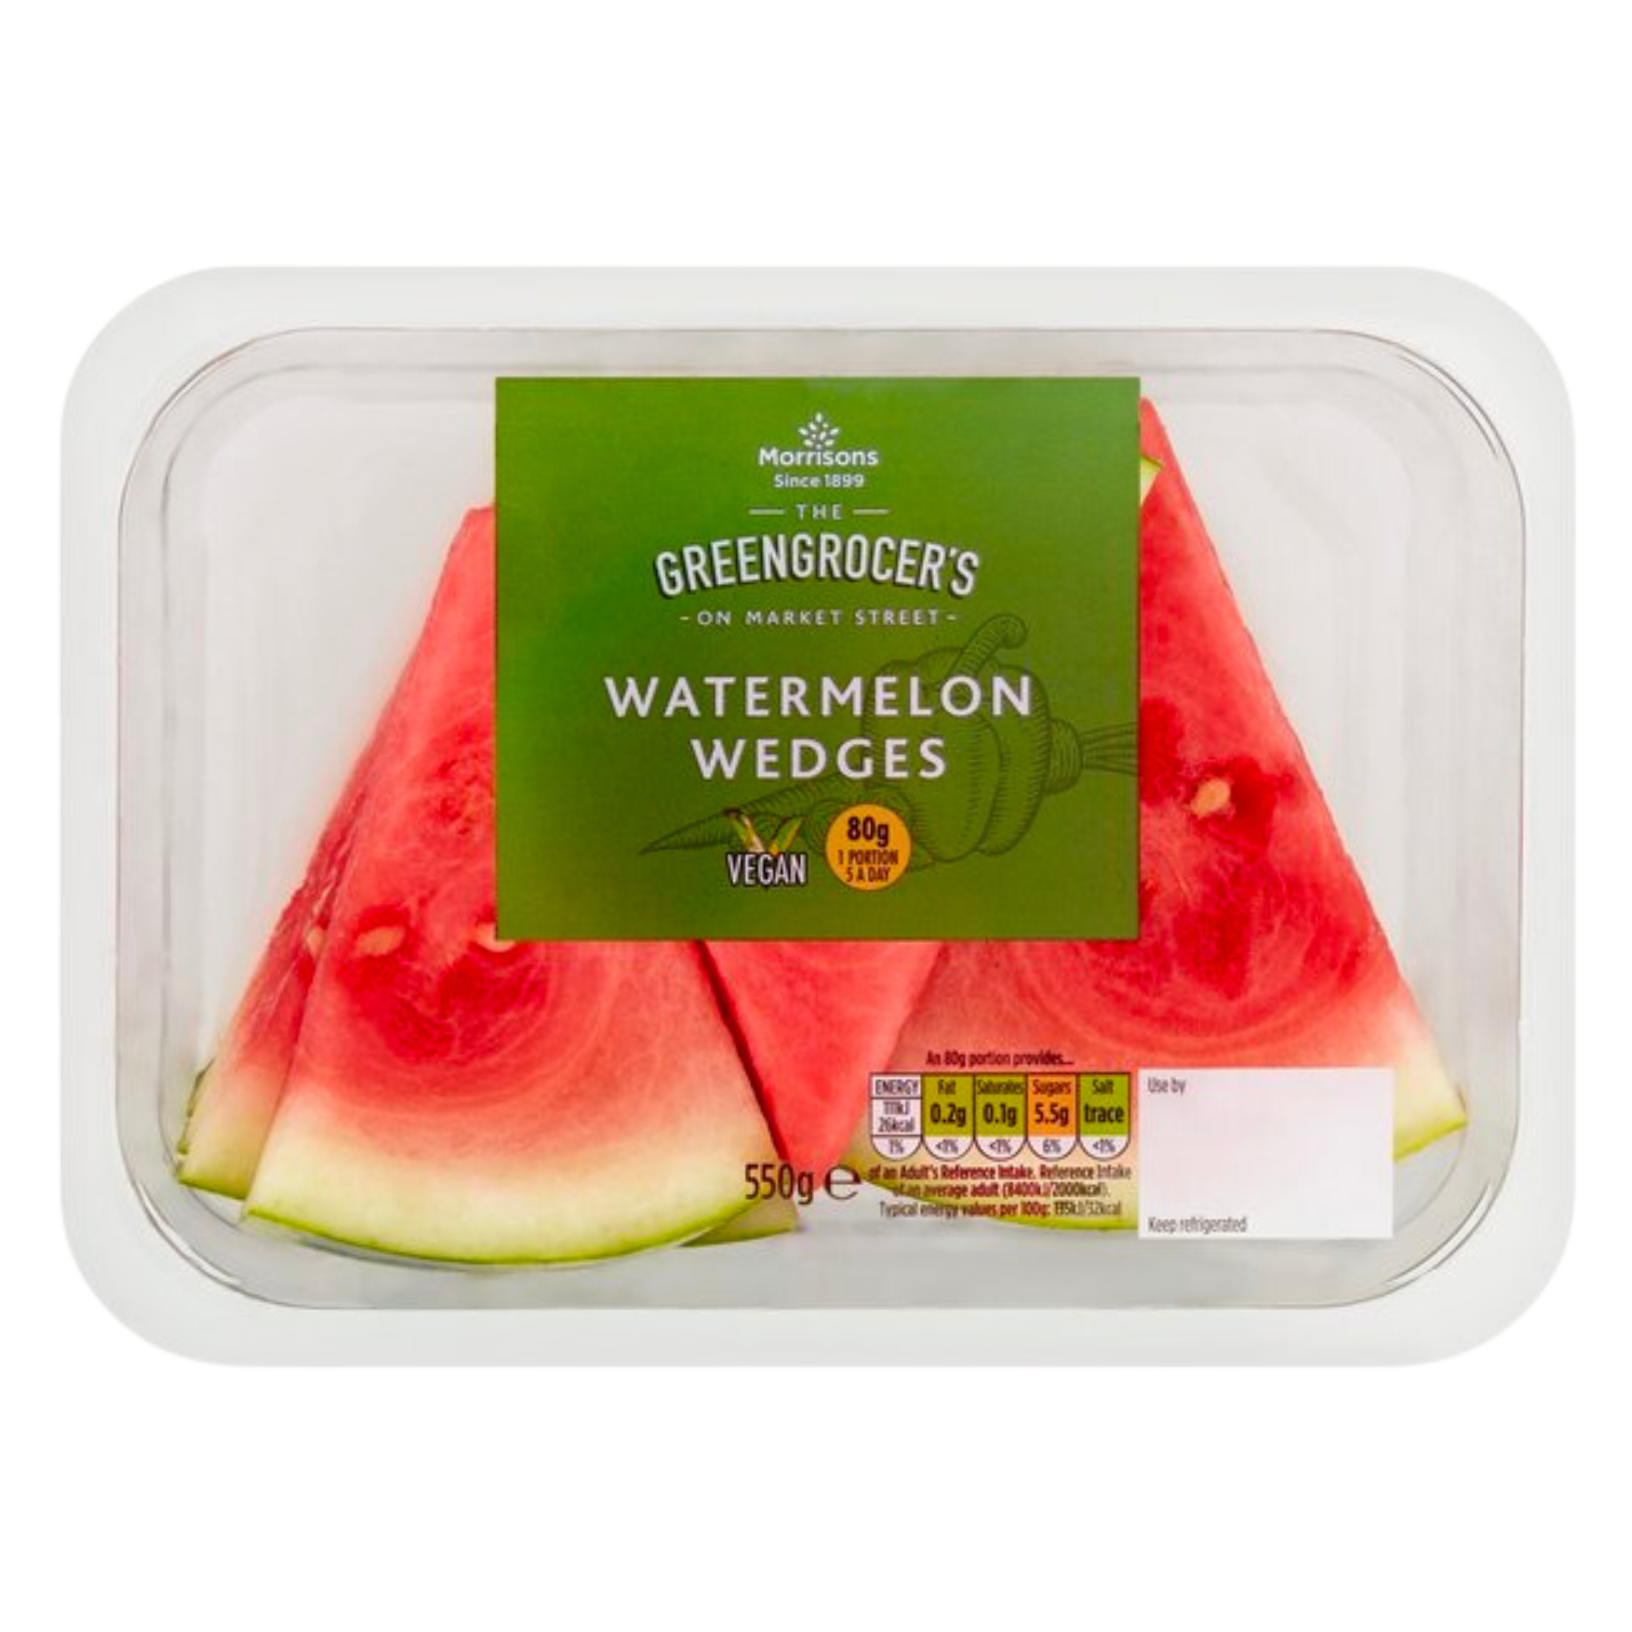 Morrisons Watermelon Wedges, 550g